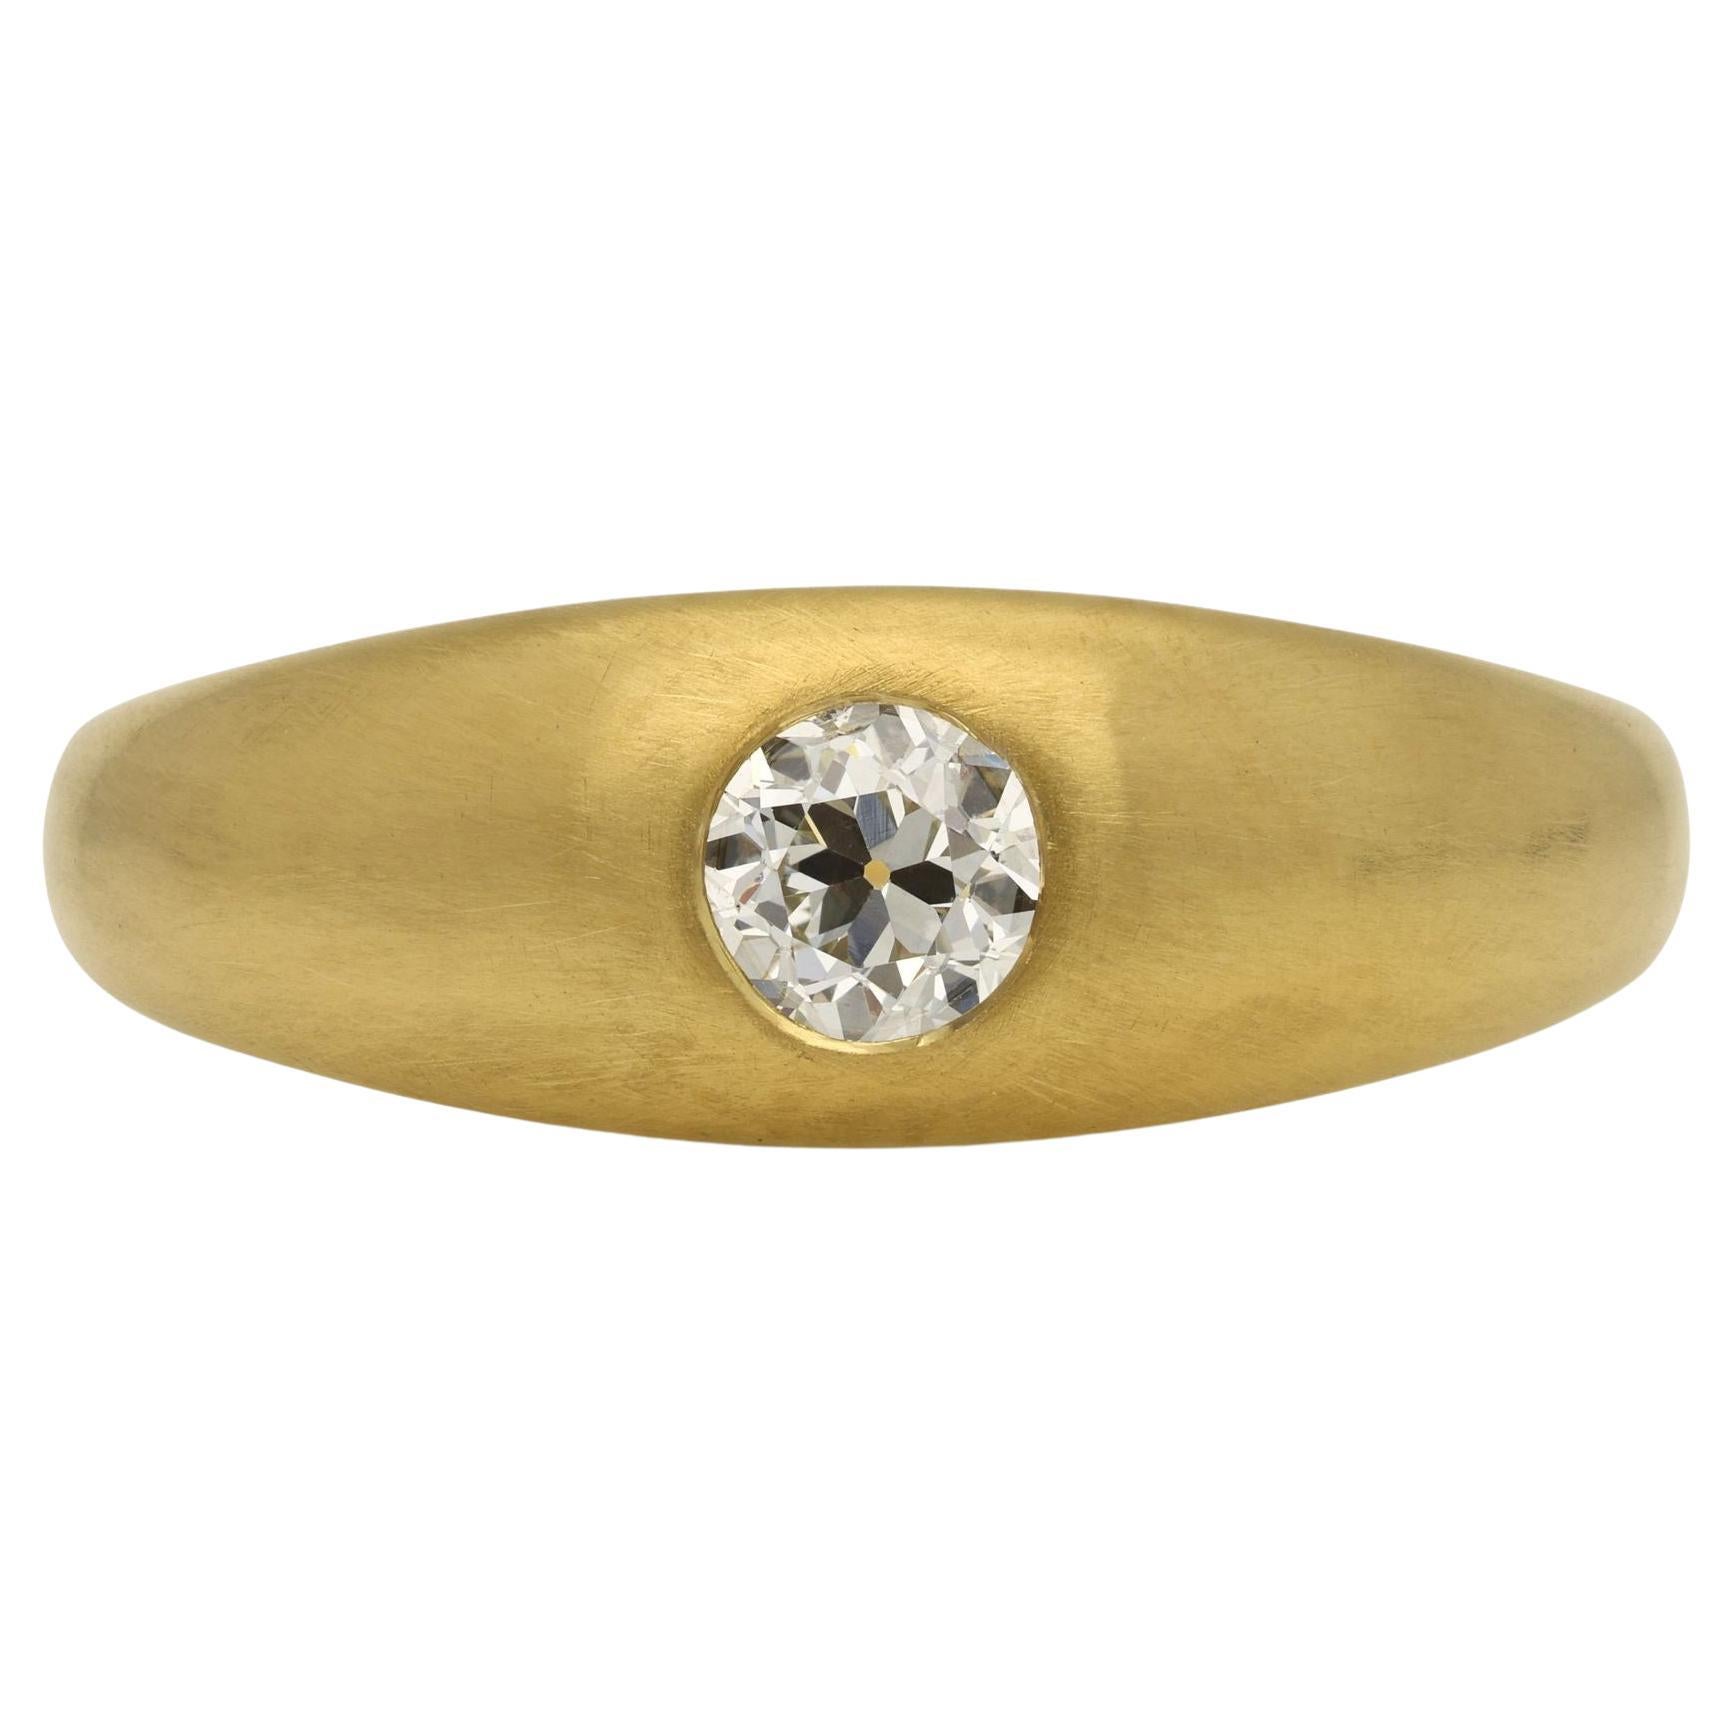 Hancocks Contemporary 0,54ct Old European Cut Diamond und 22ct Gold Band Ring im Angebot